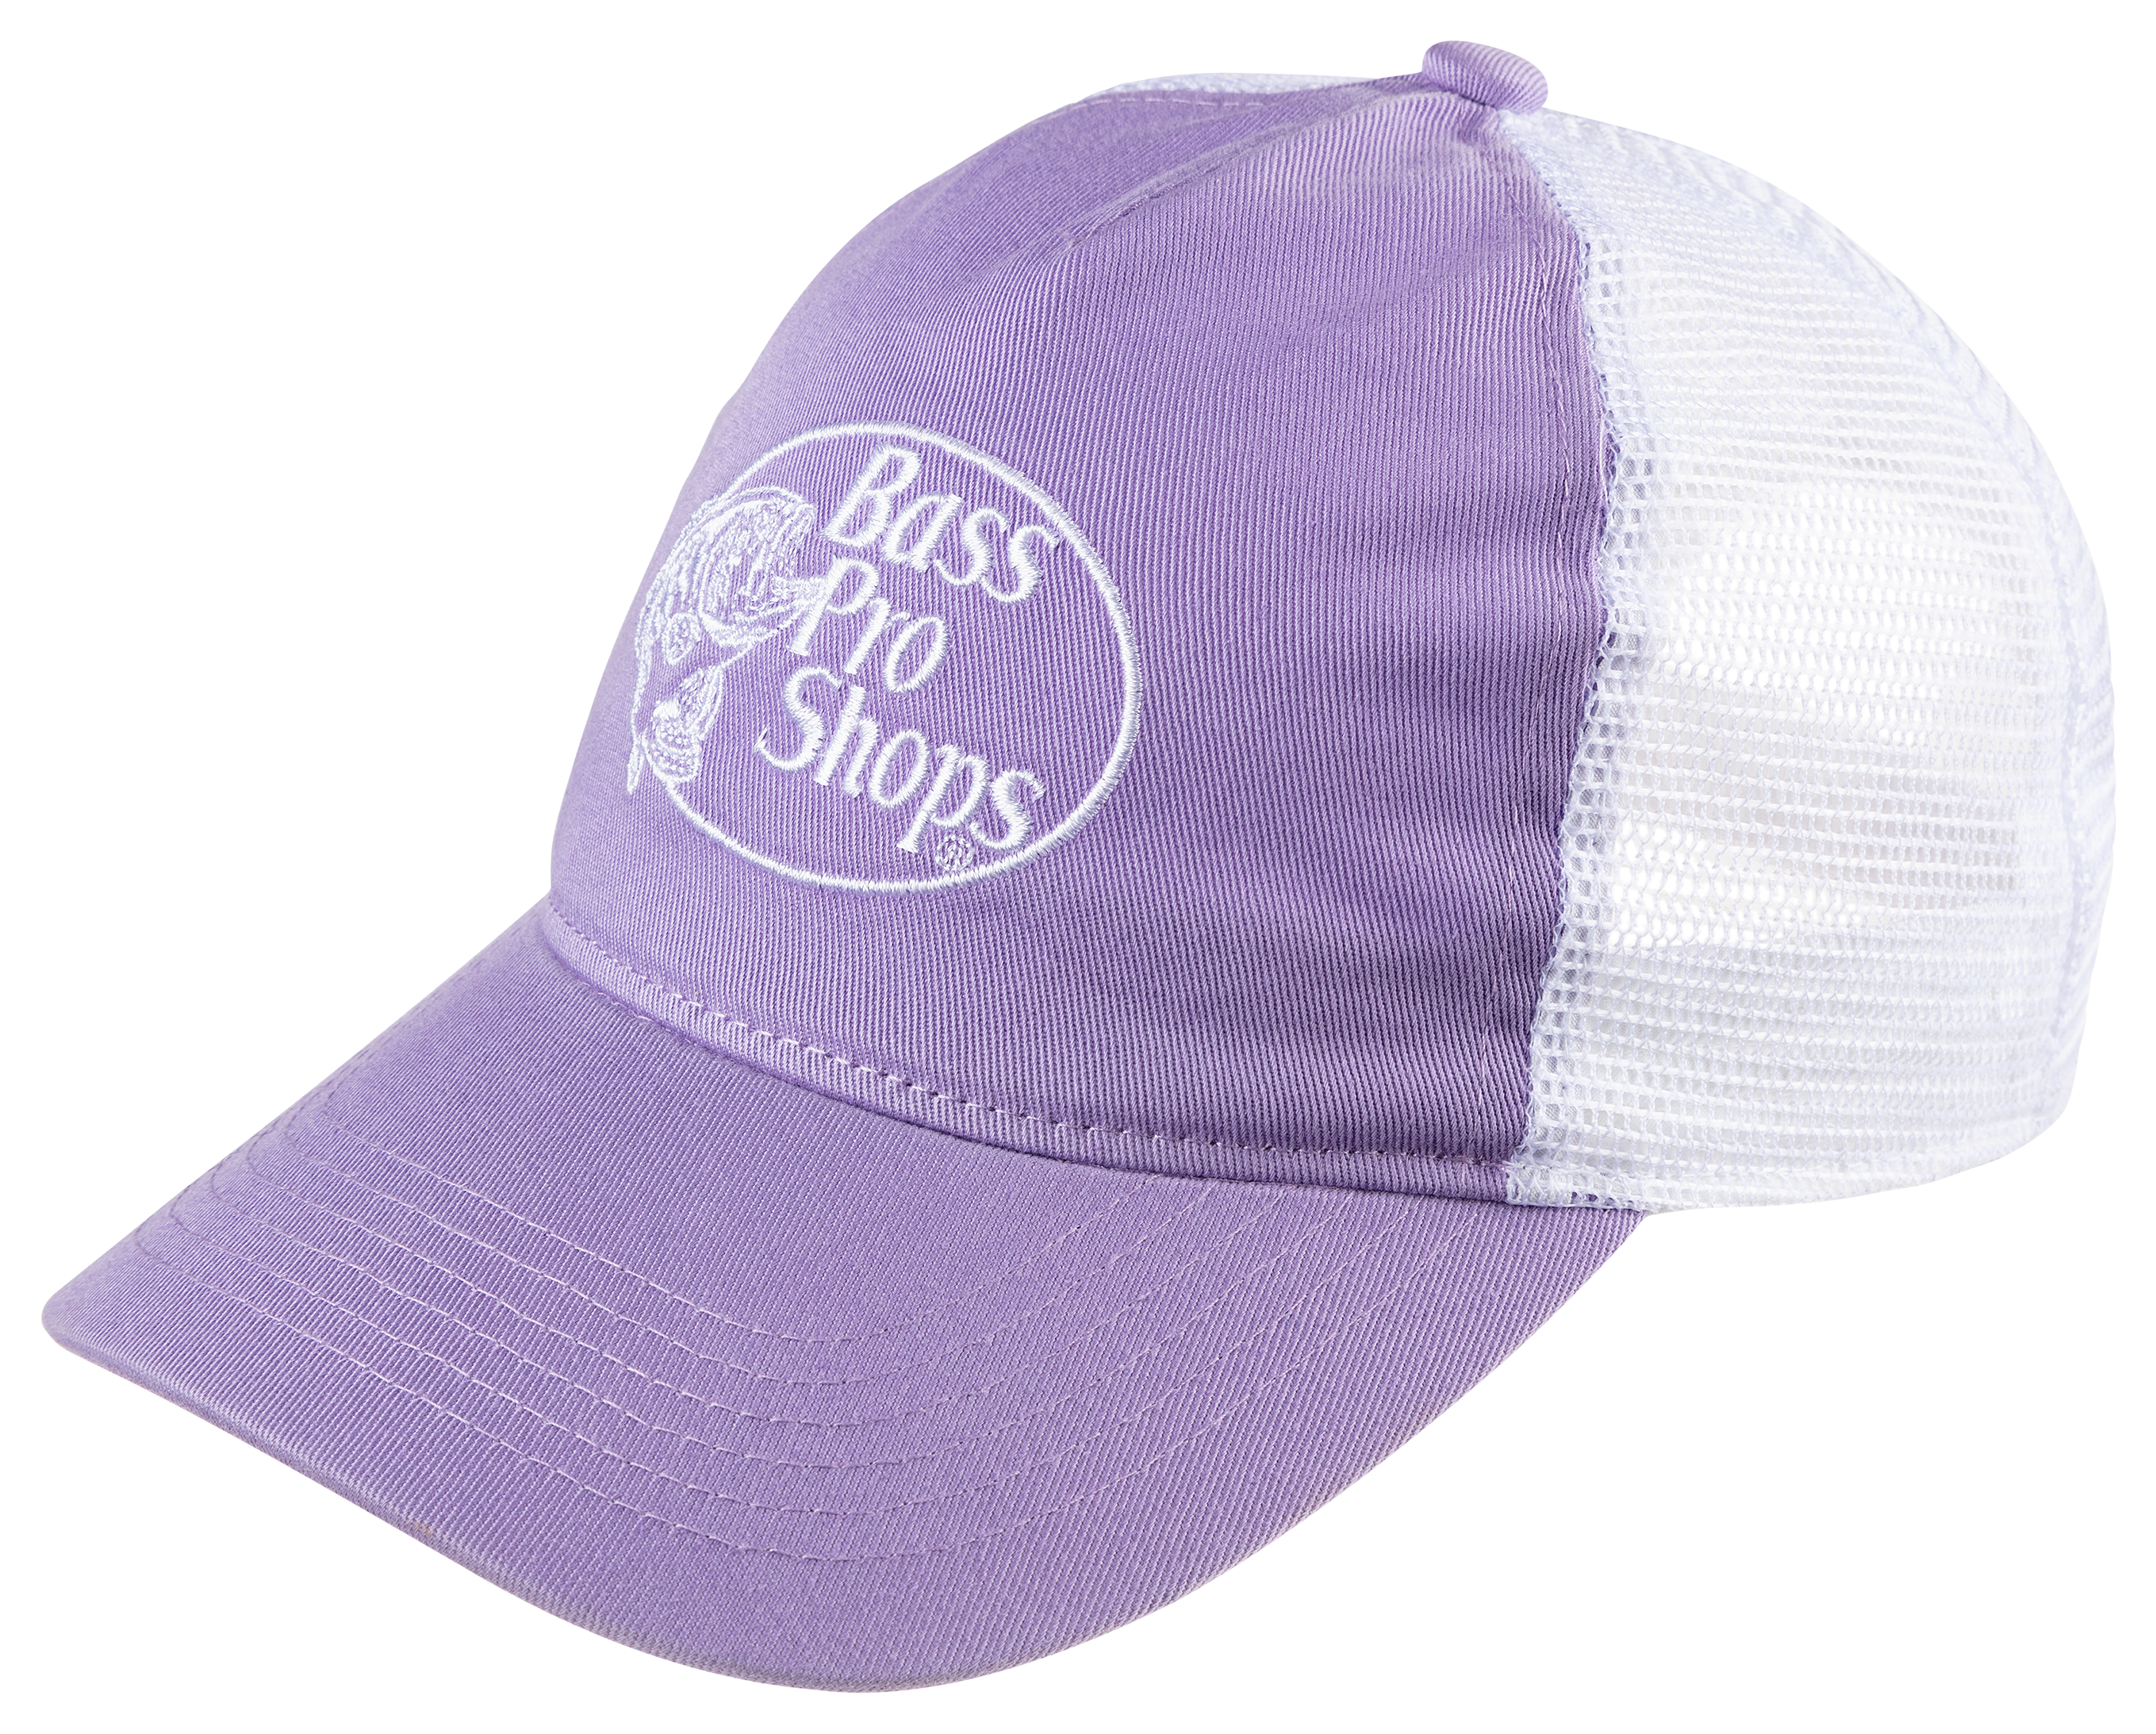 Bass Pro Shops Embroidered Logo Mesh-Back Cap for Kids